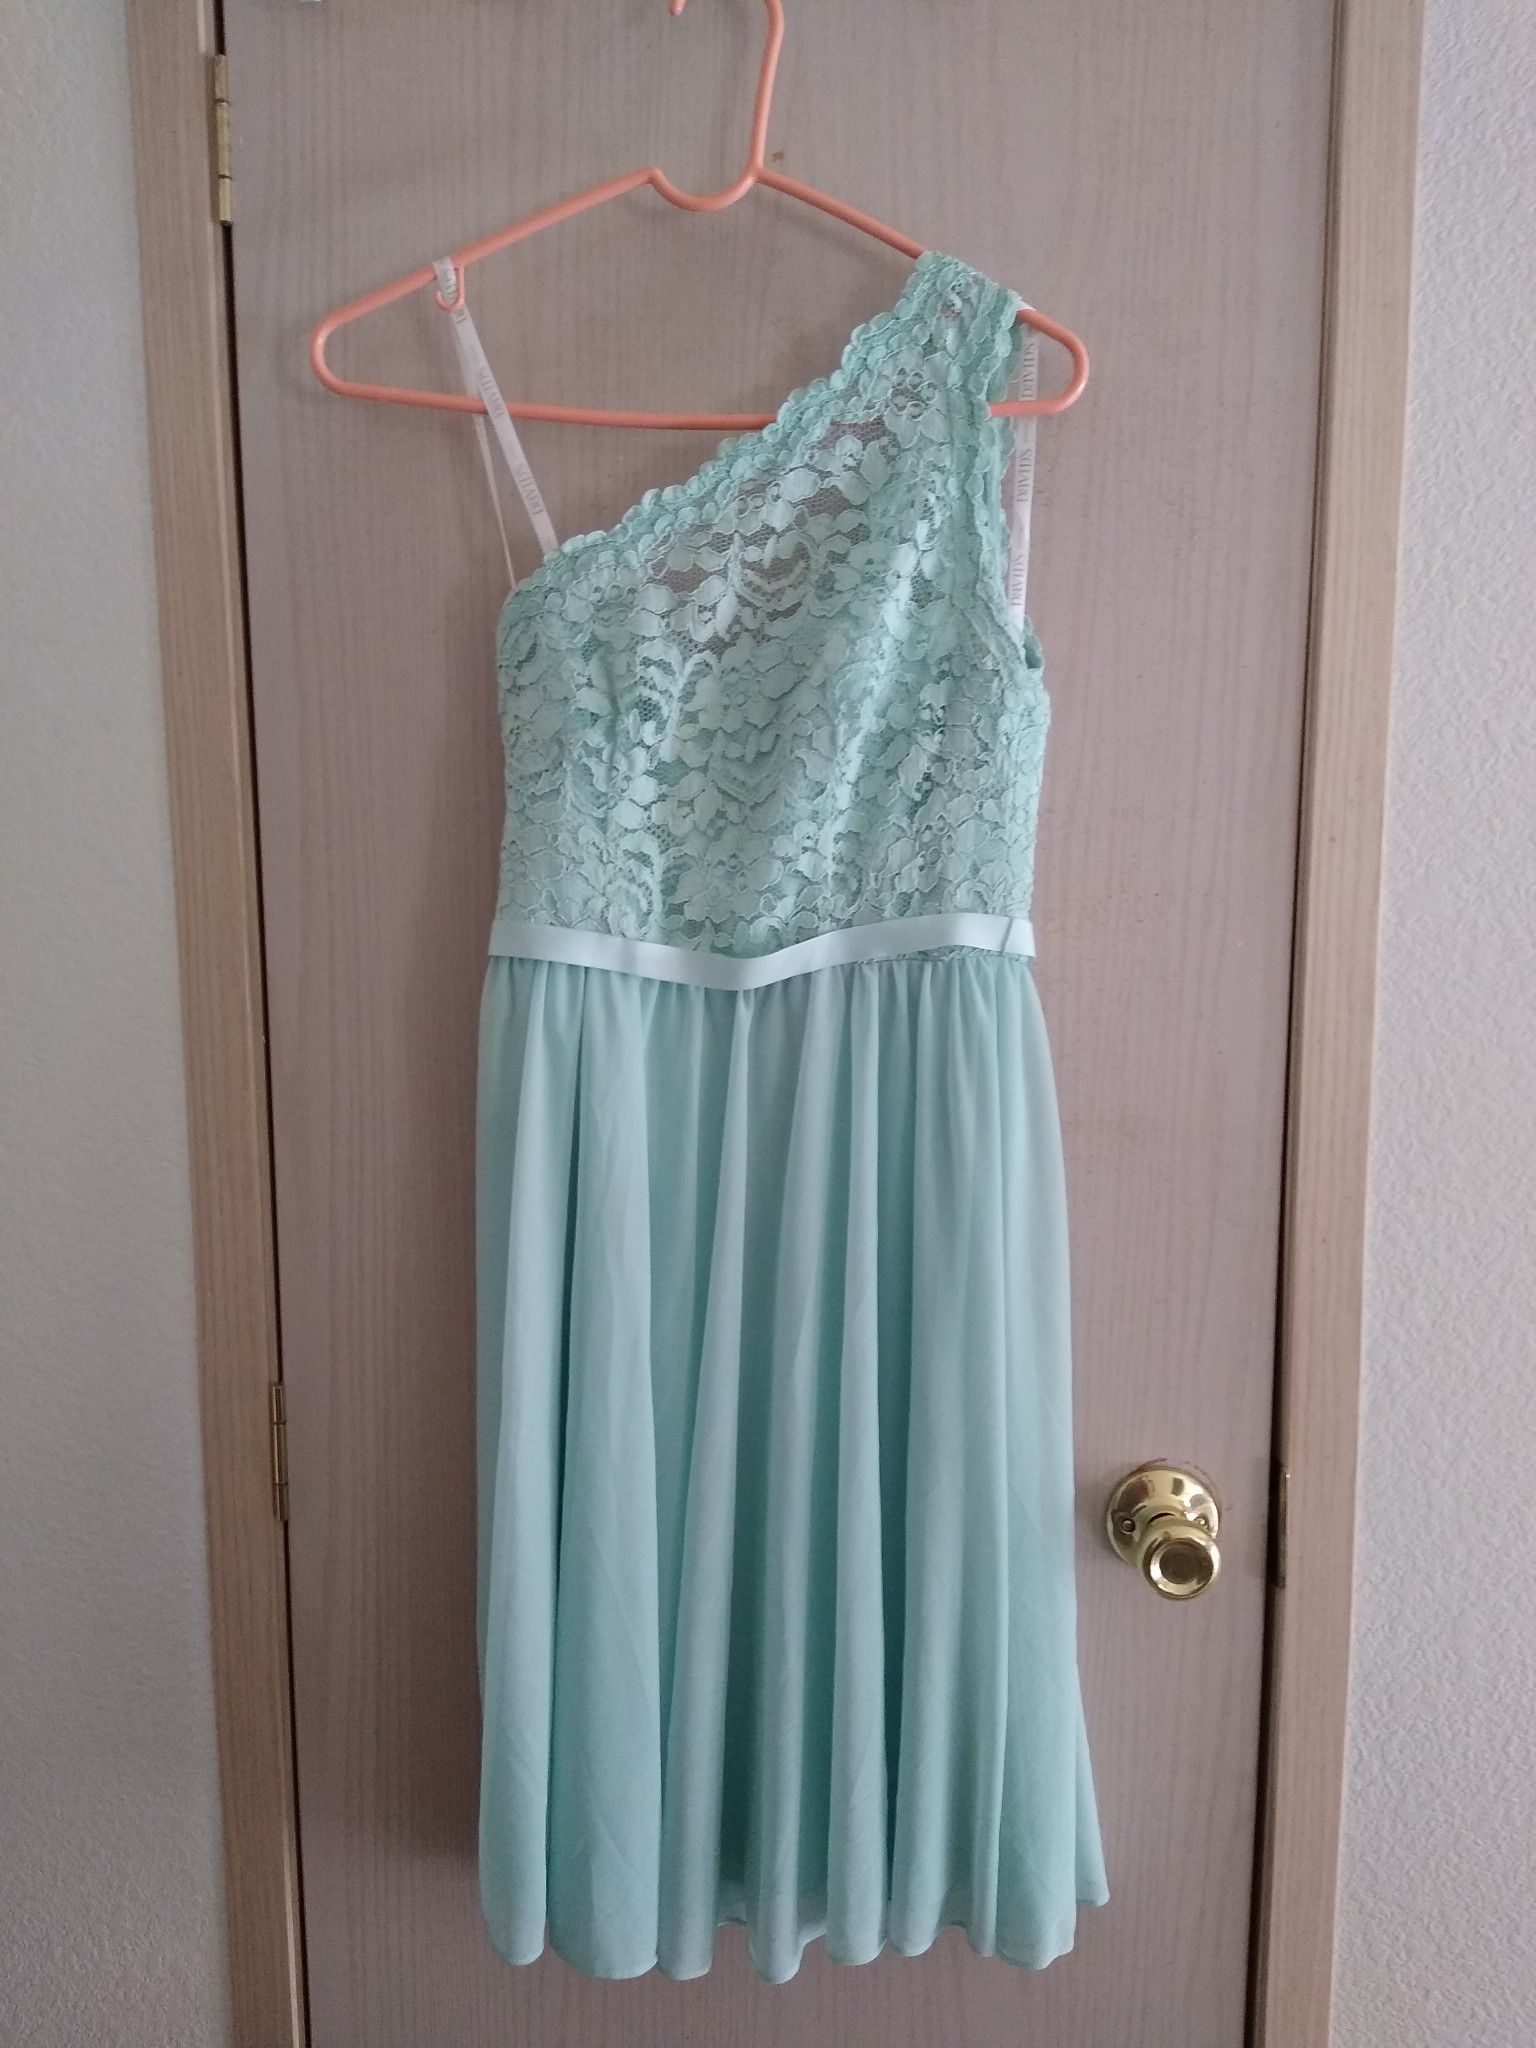 Evening gown, bridesmade dress, prom dress, etc